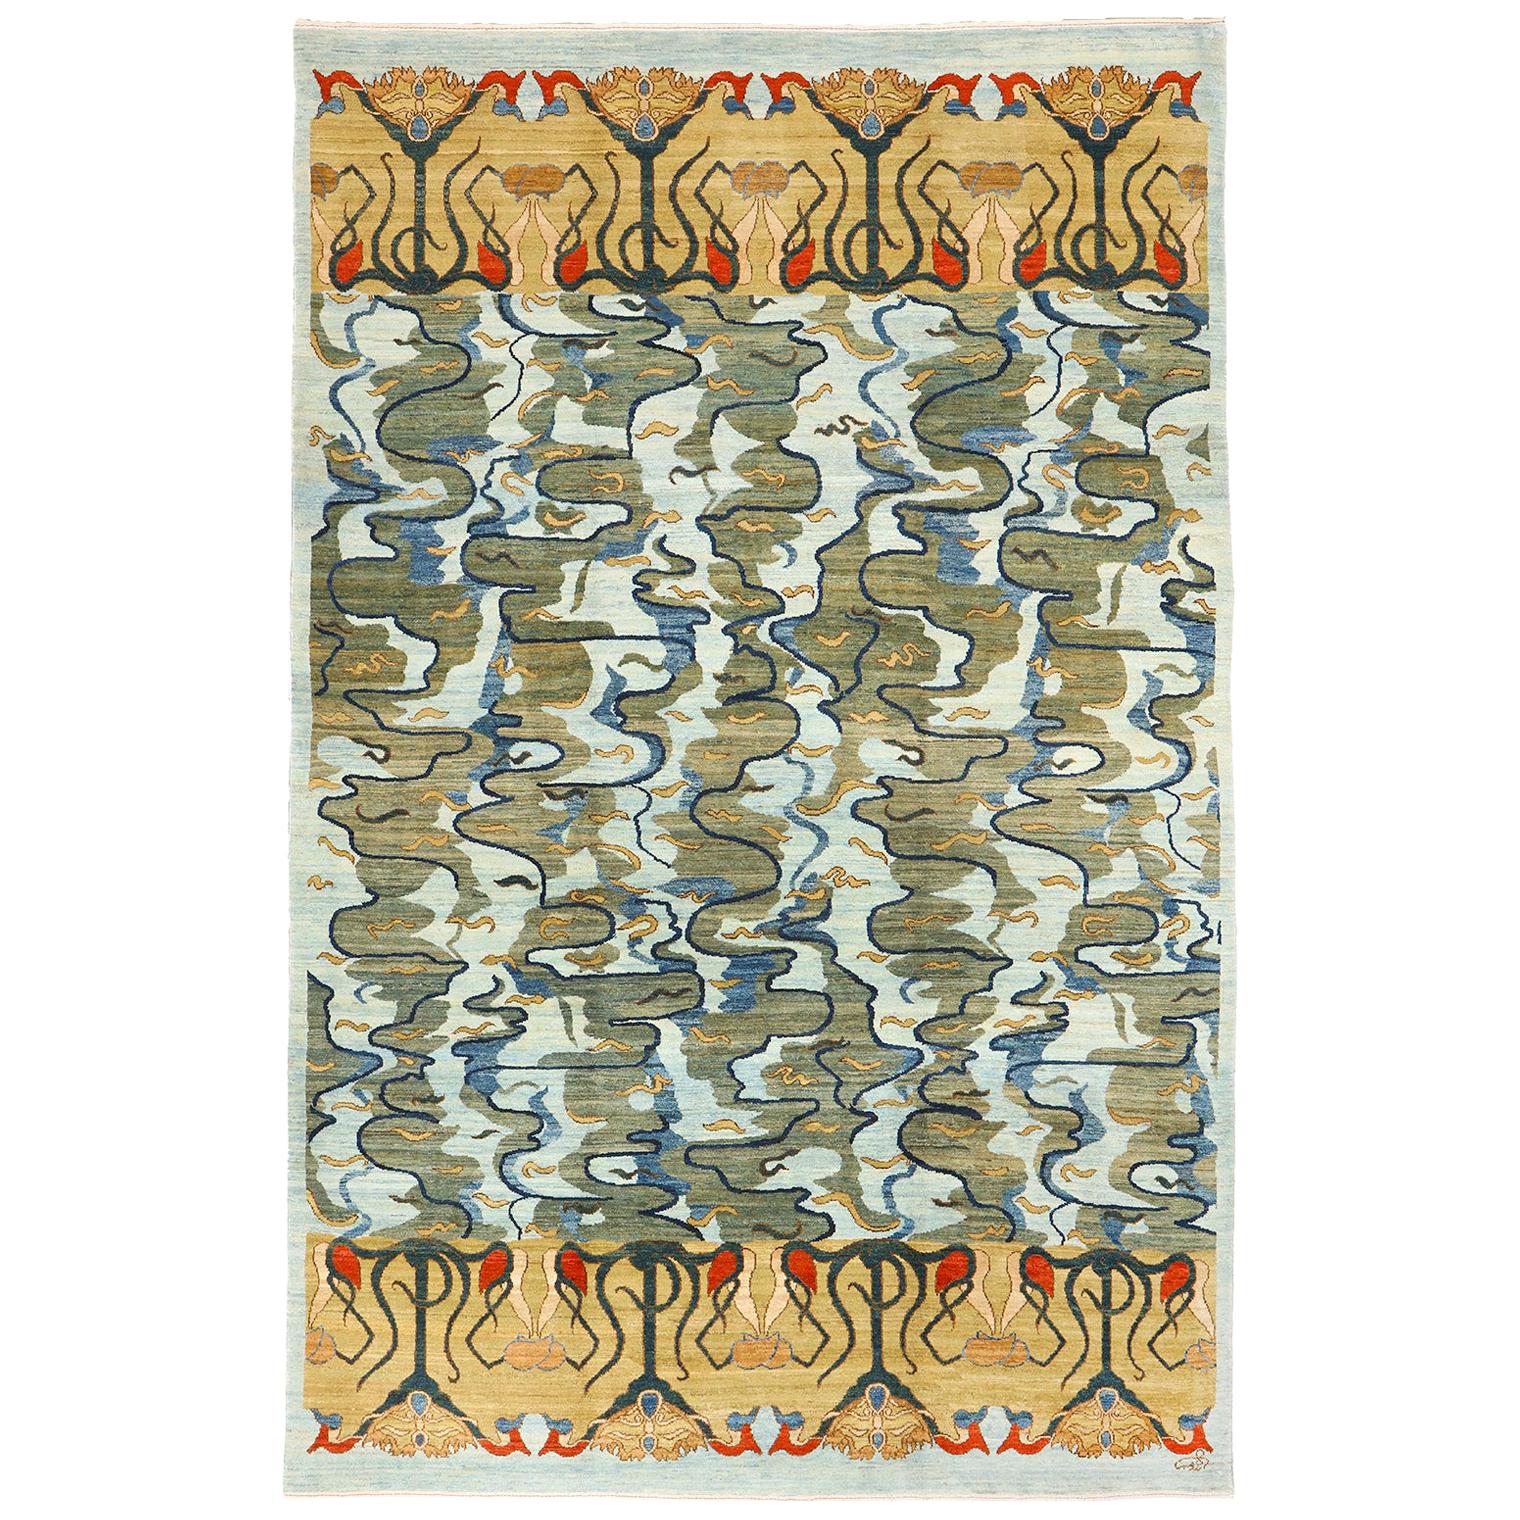 Blue, Green, Orange, and Gold Art Nouveau Design Persian Carpet